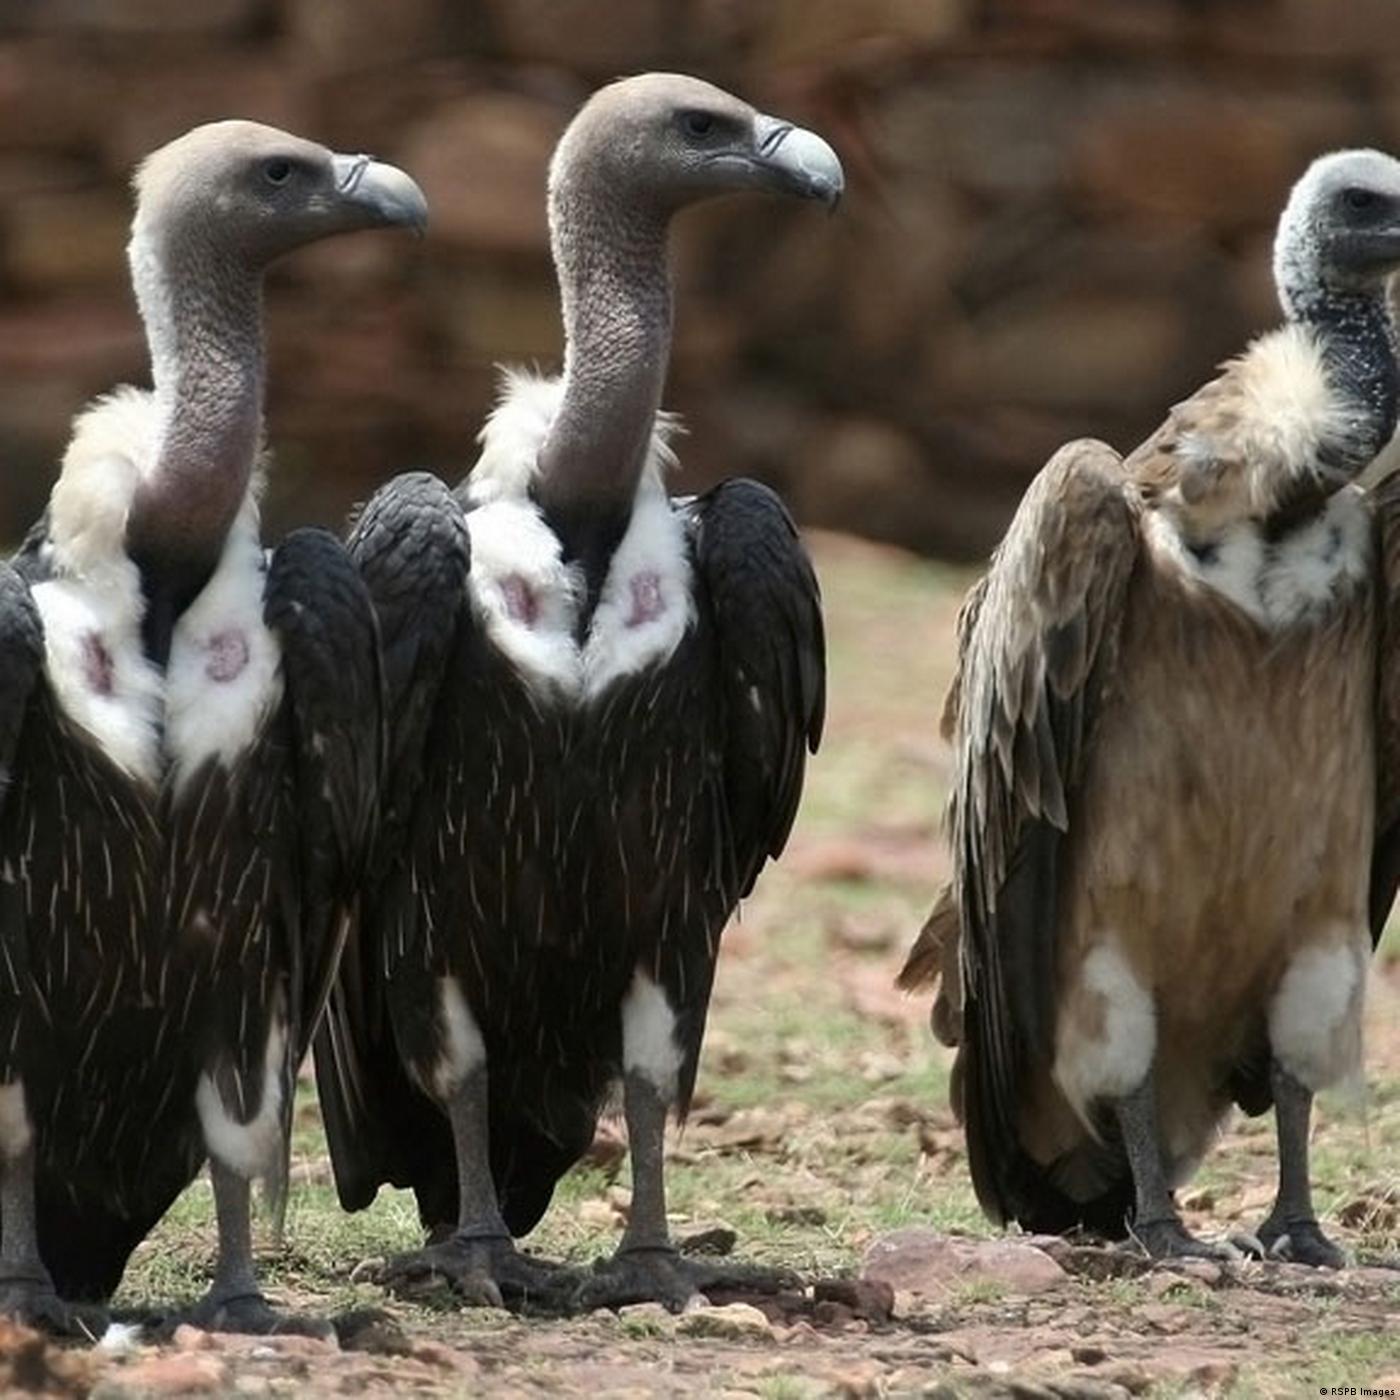 Spain: Deadly Danger for Europe’s Vultures